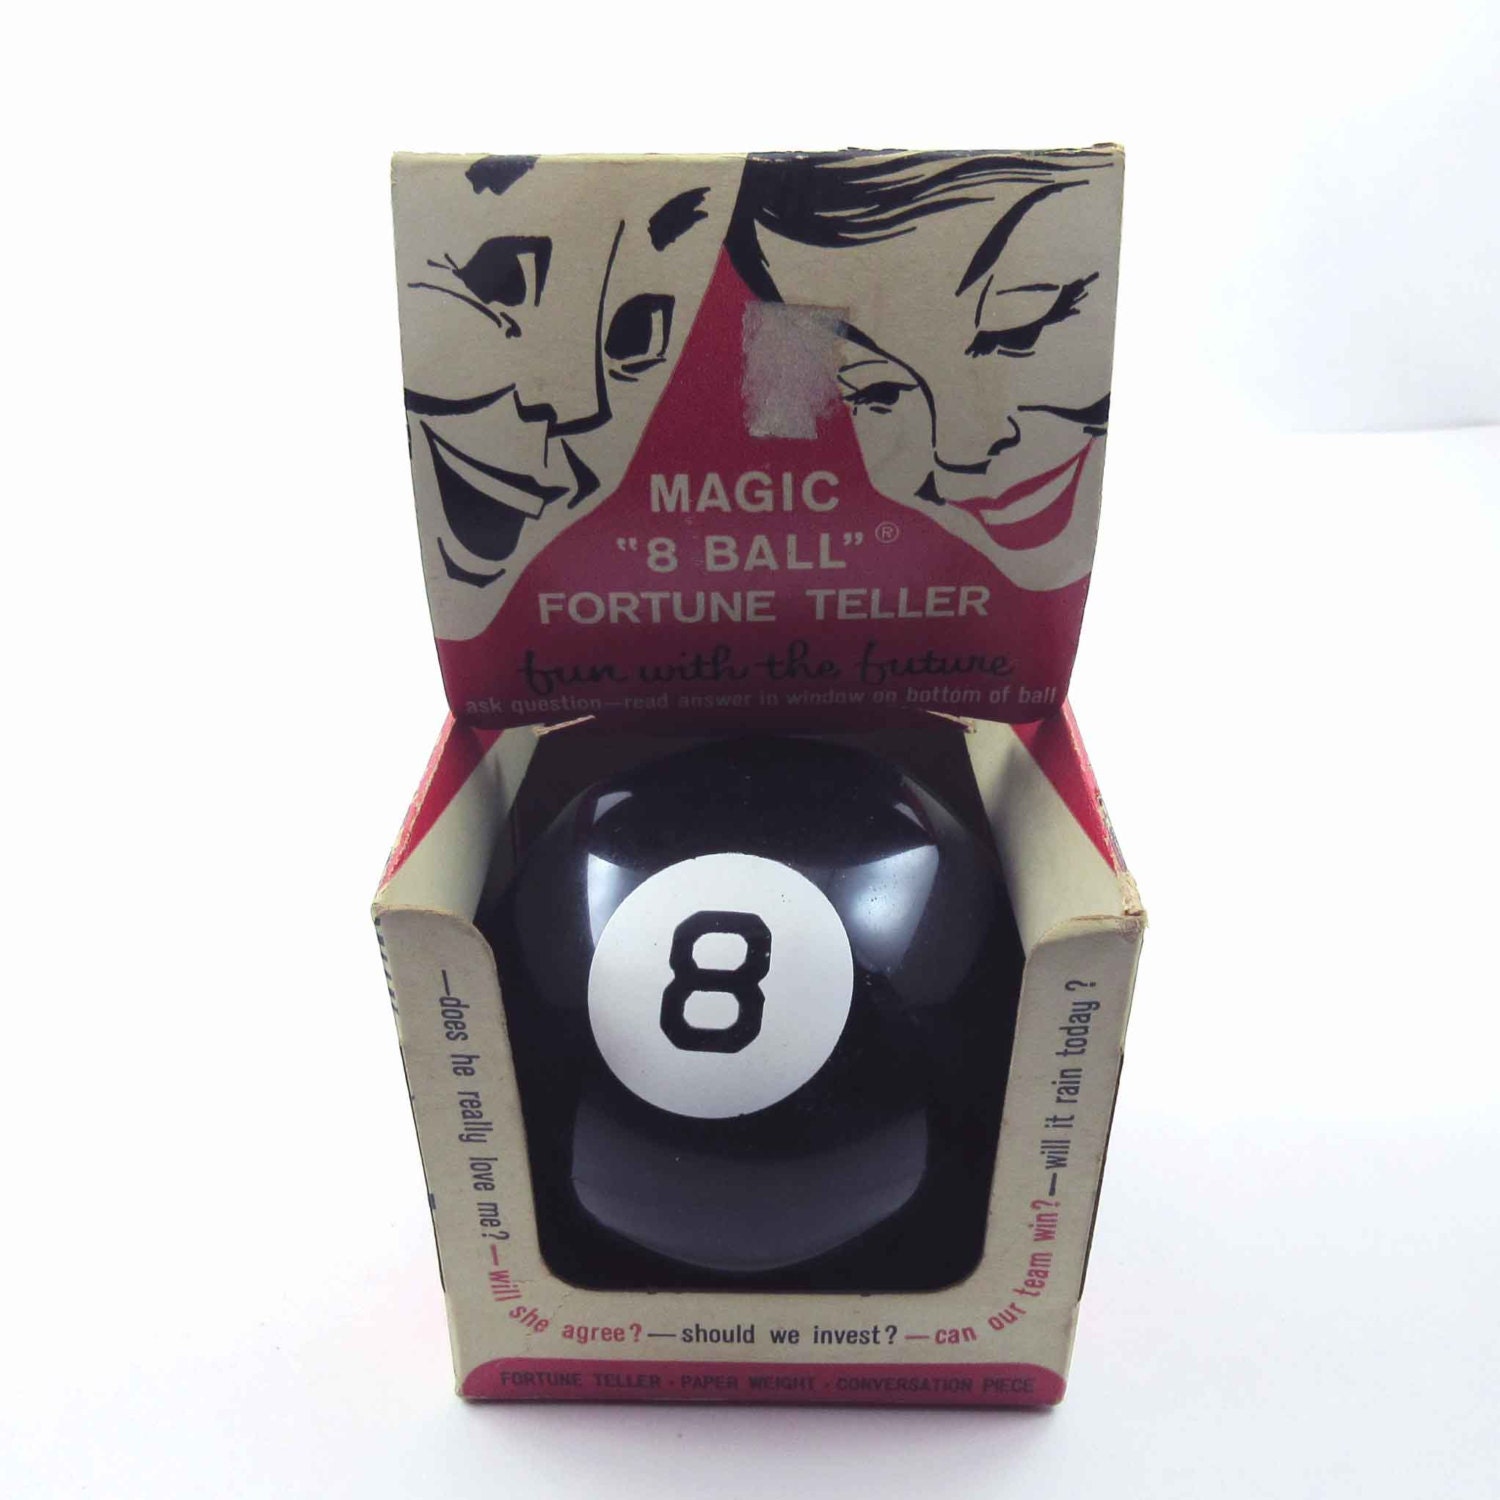 Magic 8 Ball-1960s  Magic 8 ball, Childhood toys, Classic toys